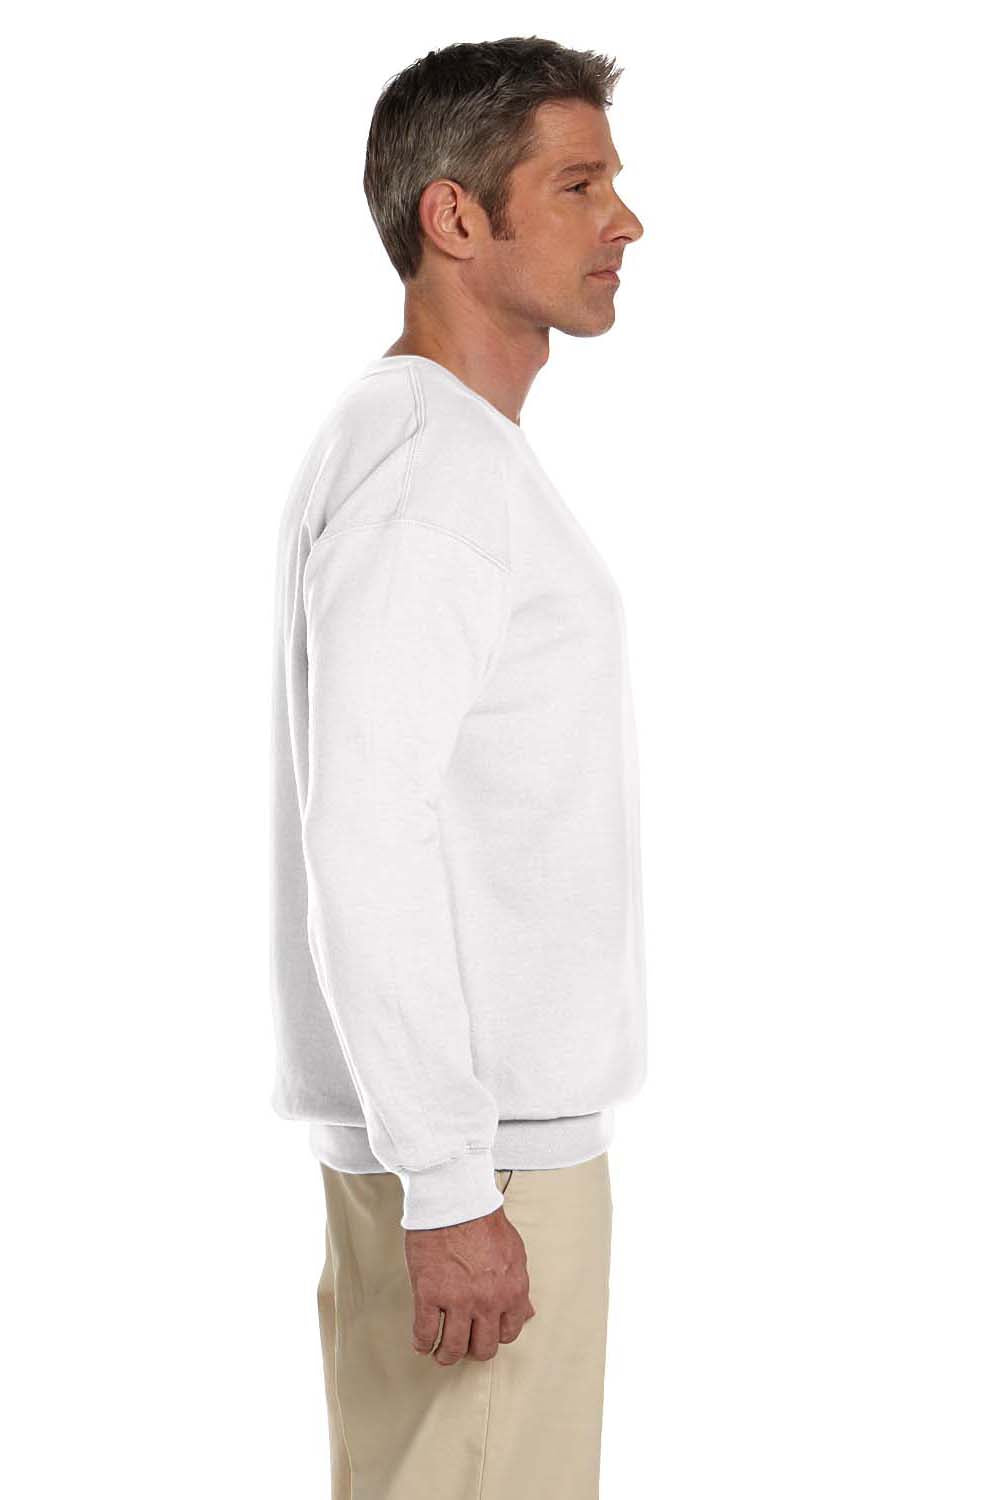 Gildan G180 Mens Fleece Crewneck Sweatshirt White Side